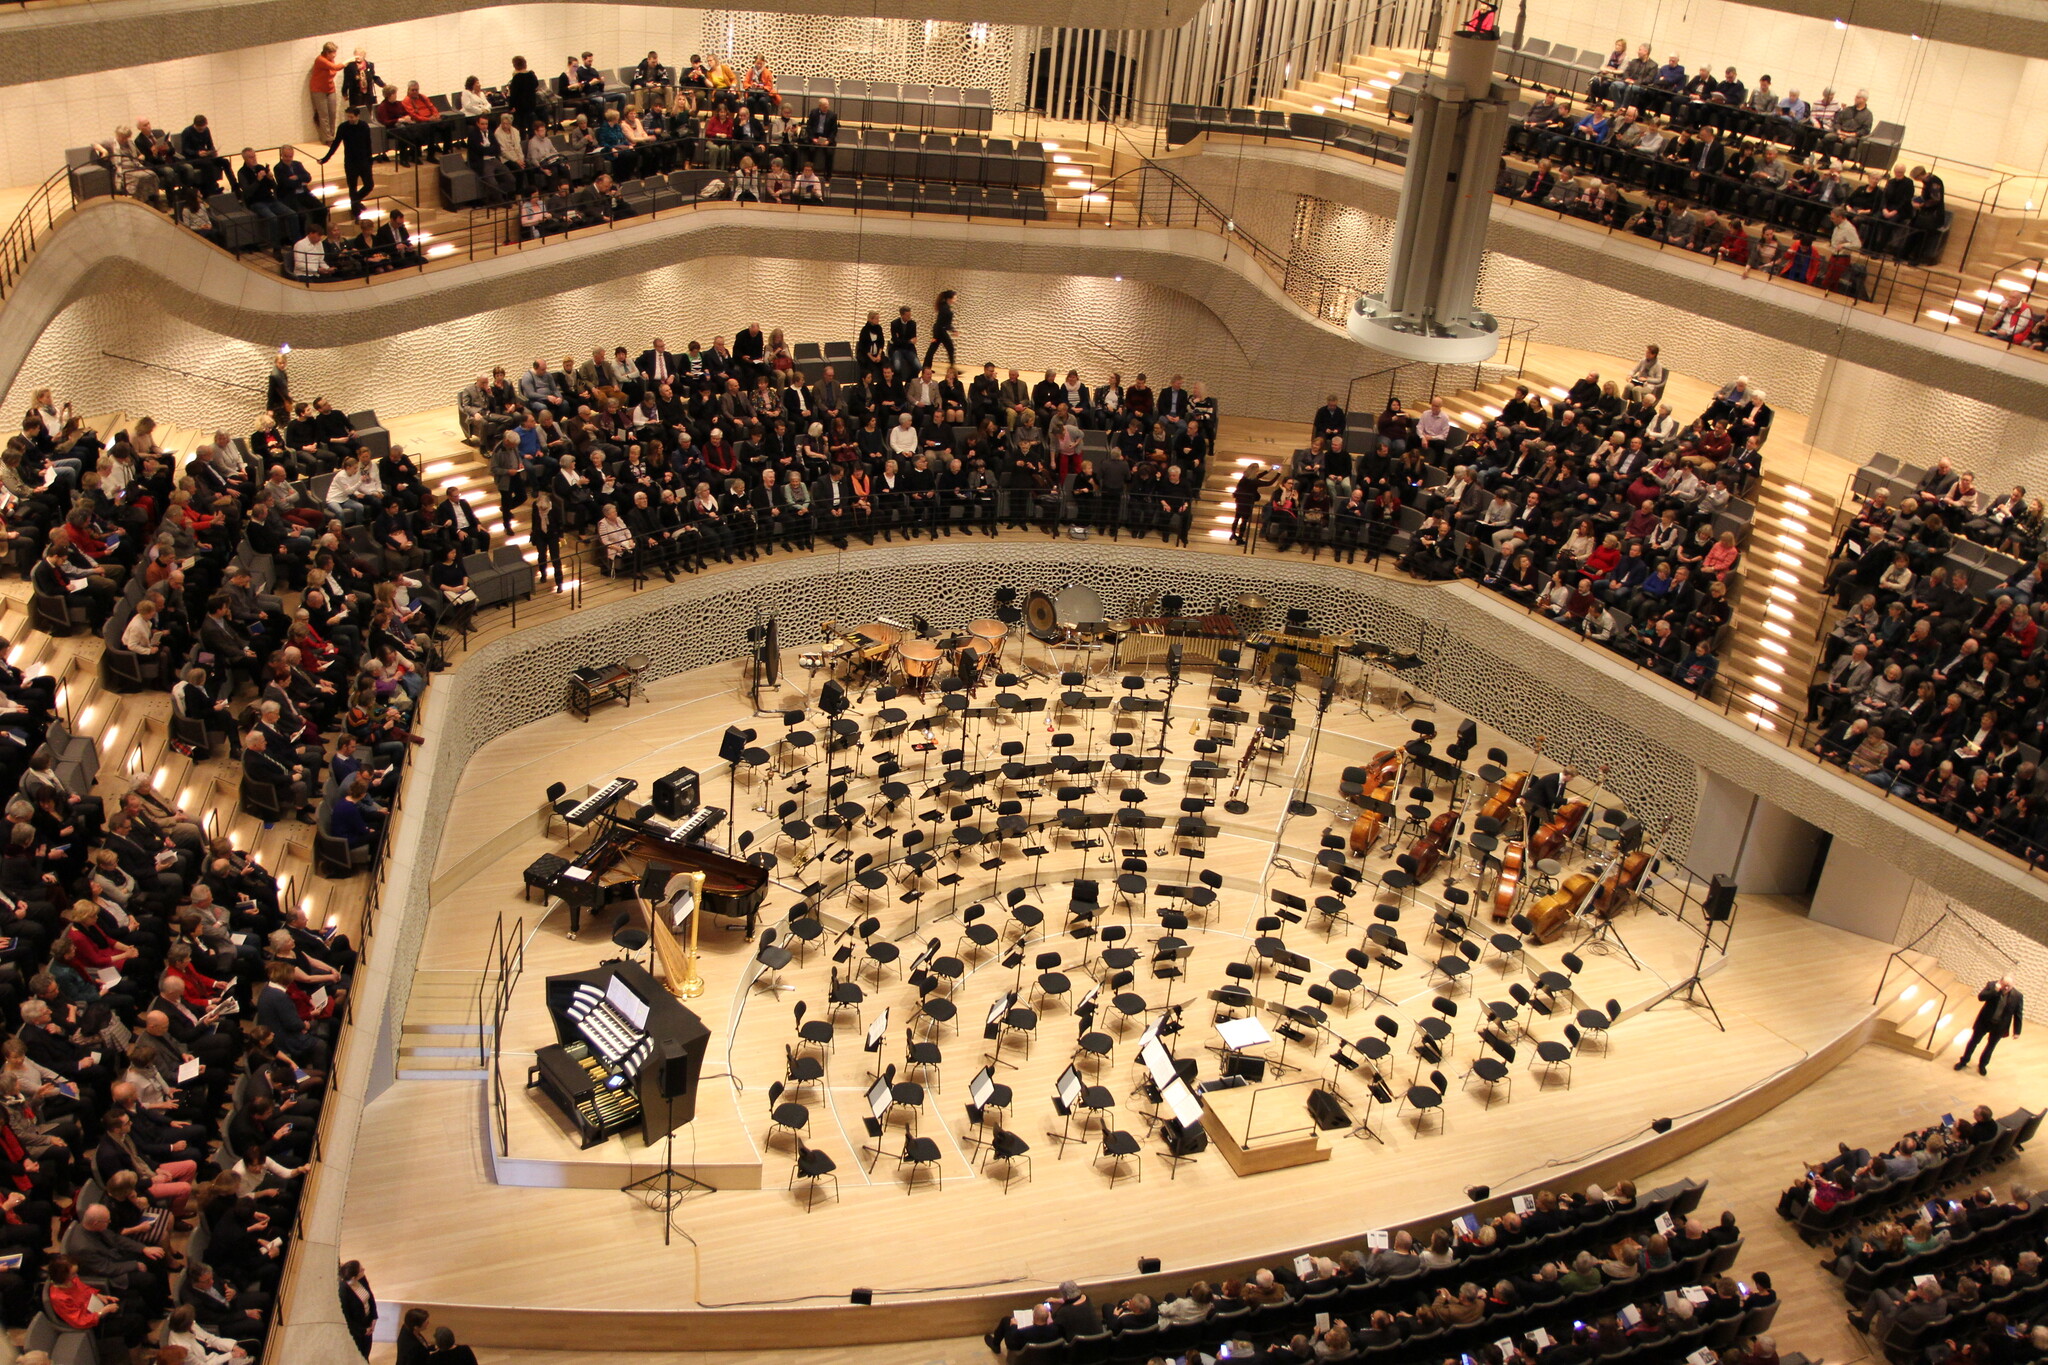 Elbphilharmonie, Hamburg, a famous example of generative design using algorithms to optimise acoustic sounds